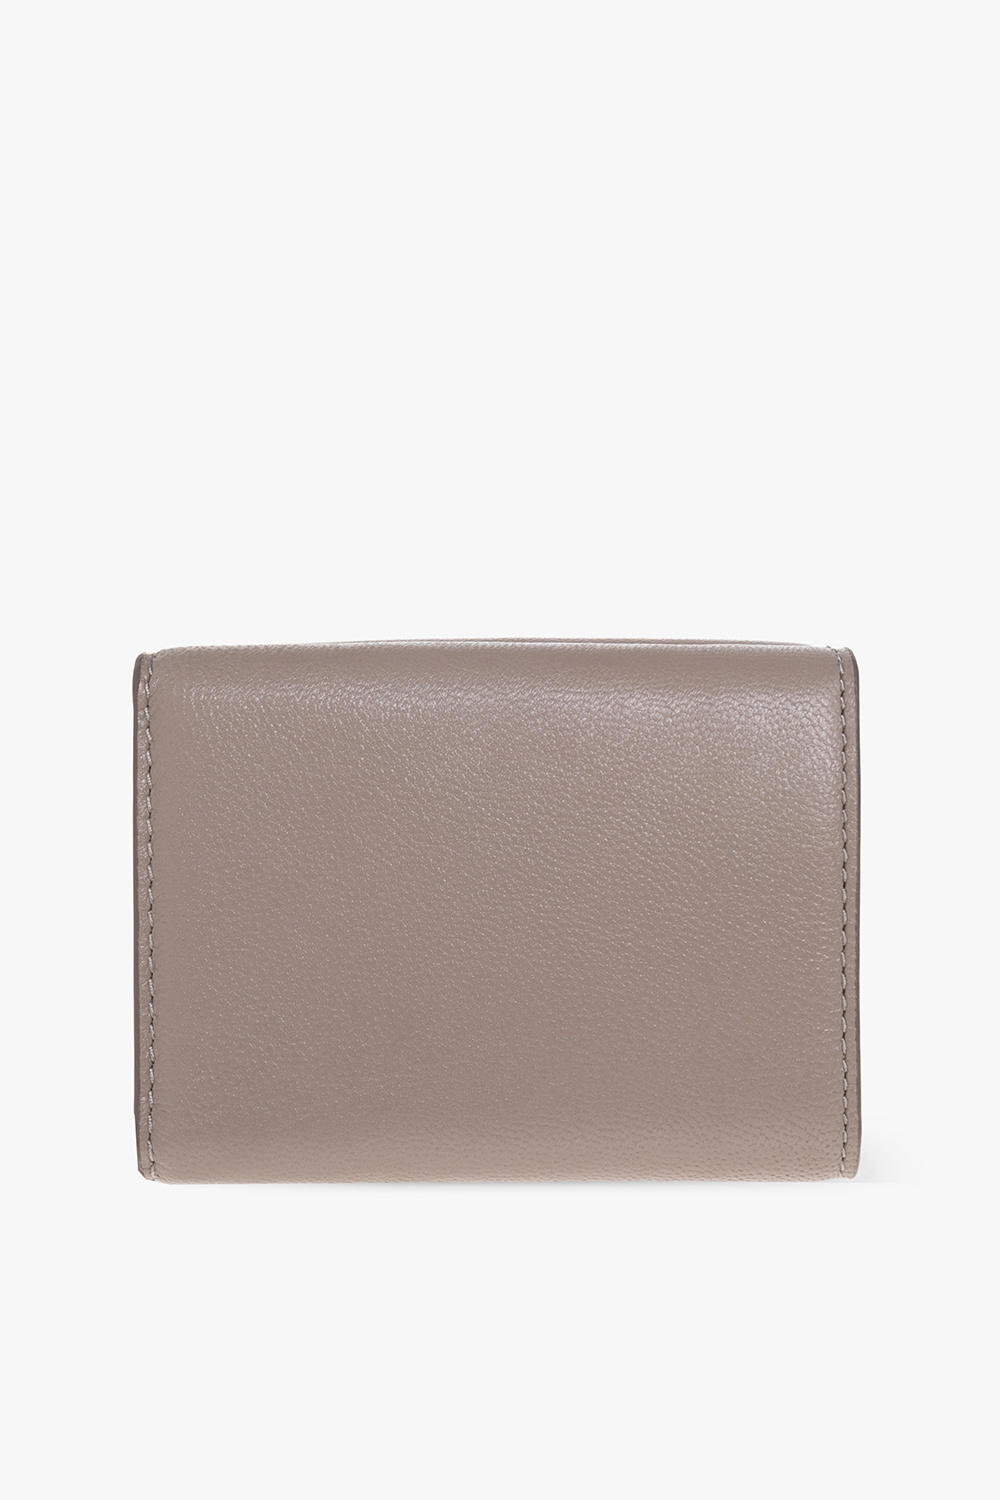 Marc Jacobs ‘The Slim 84 Medium’ wallet